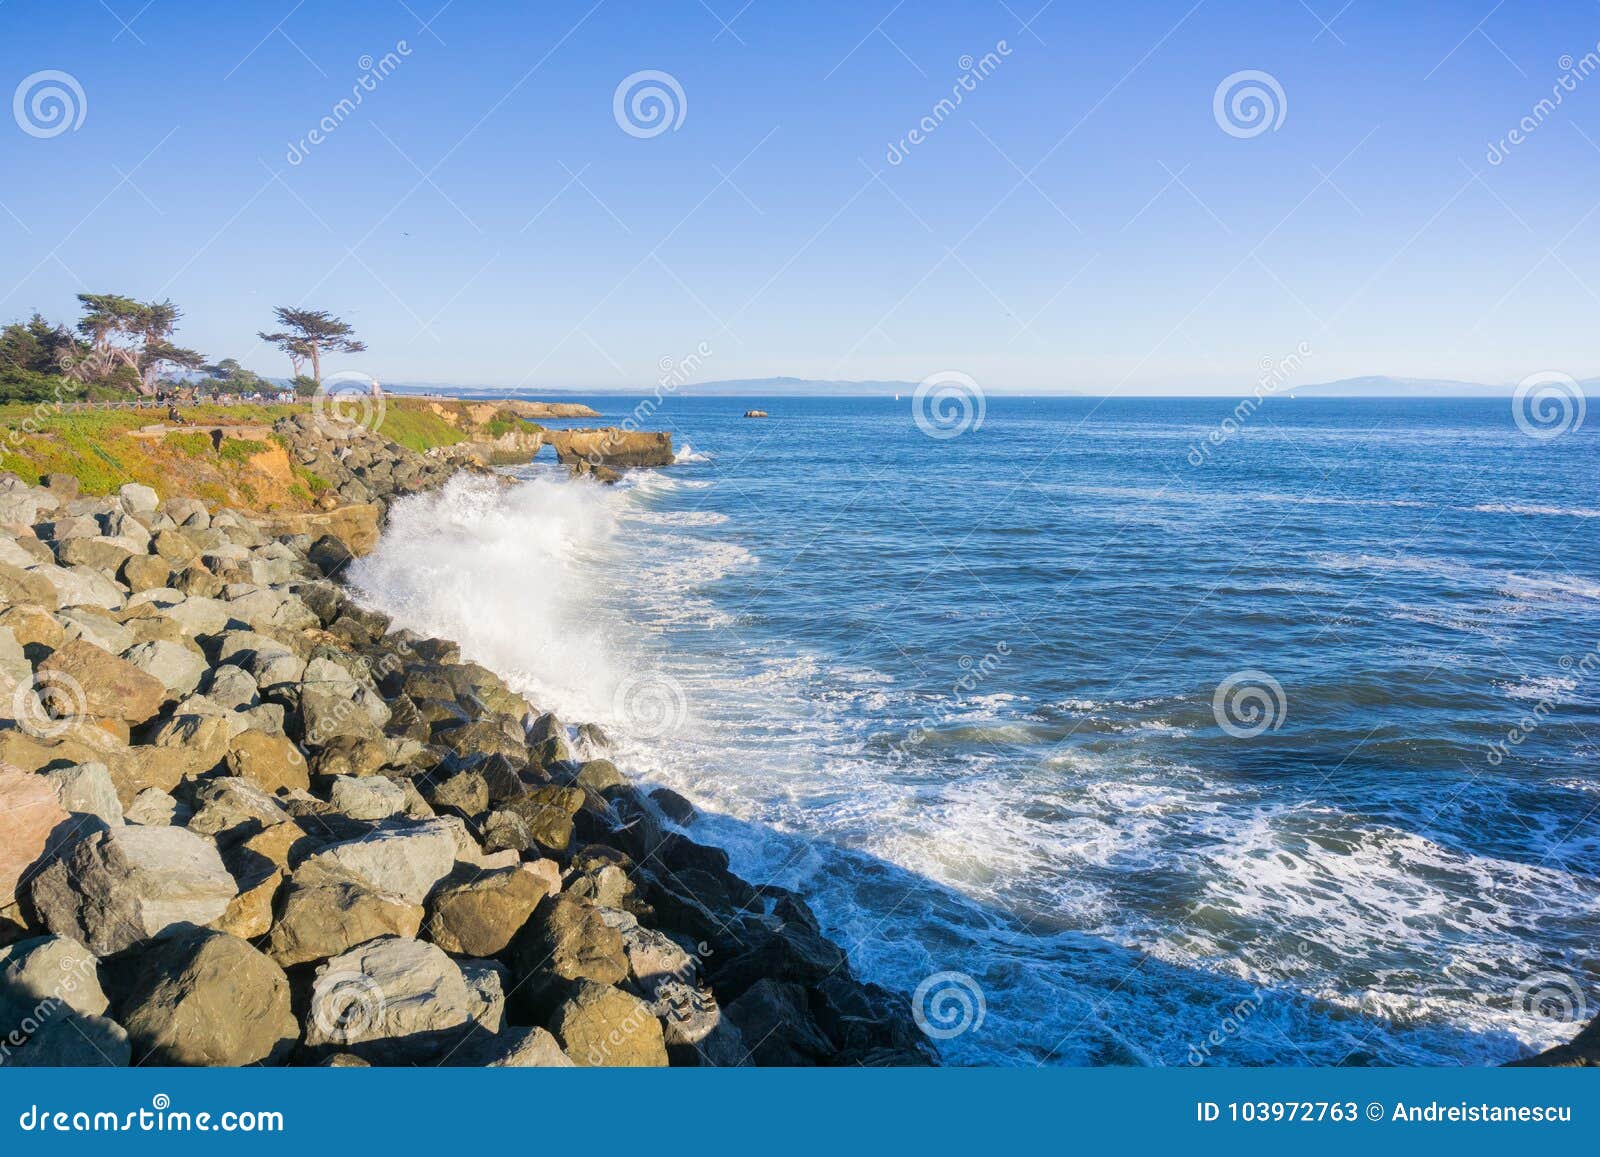 waves crashing on the rocky shoreline of the pacific coast; santa cruz, california